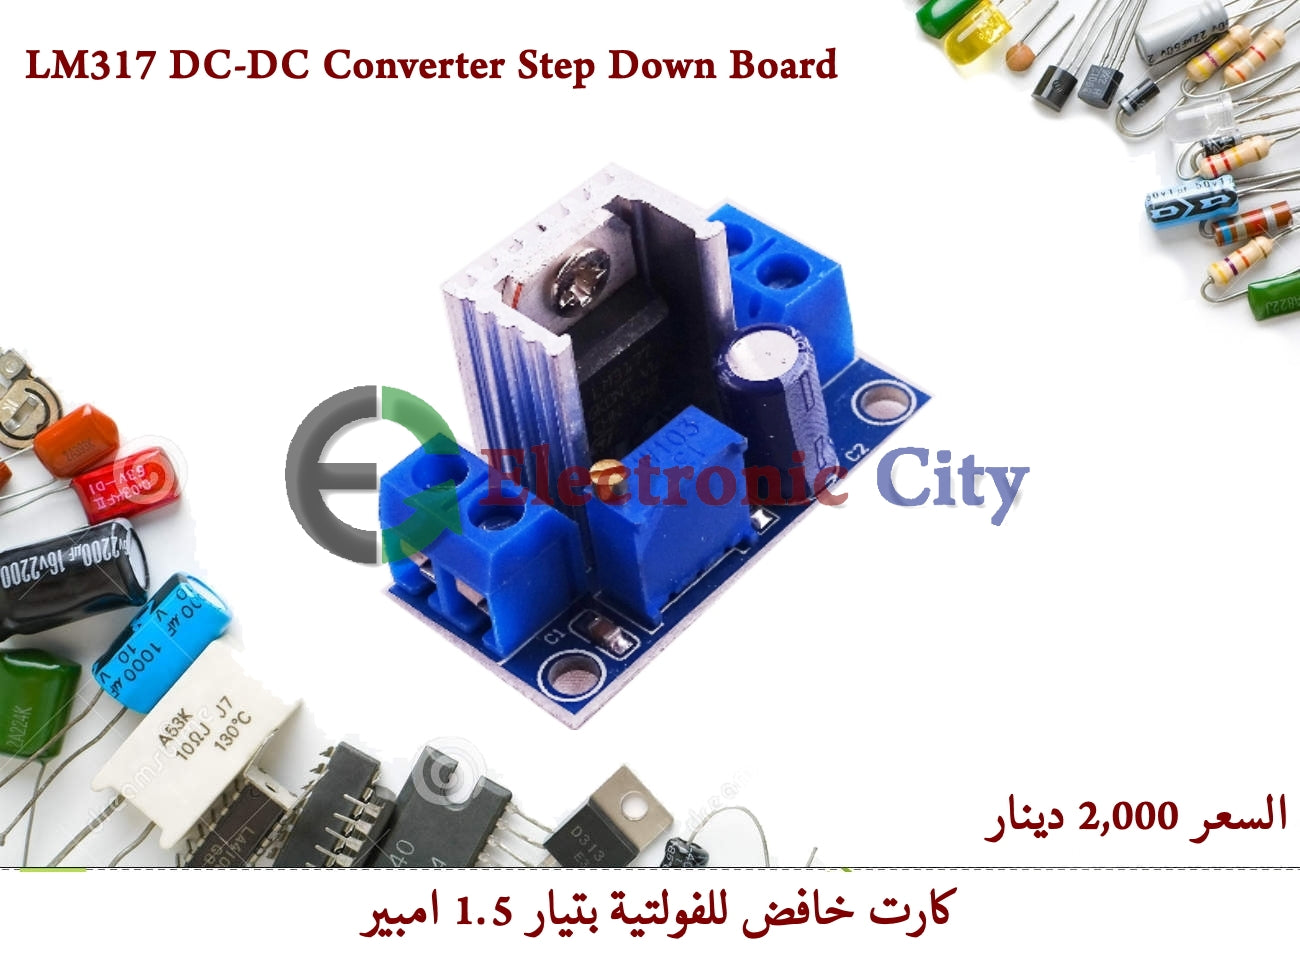 LM317 DC-DC Converter Step Down Board #G8 011038